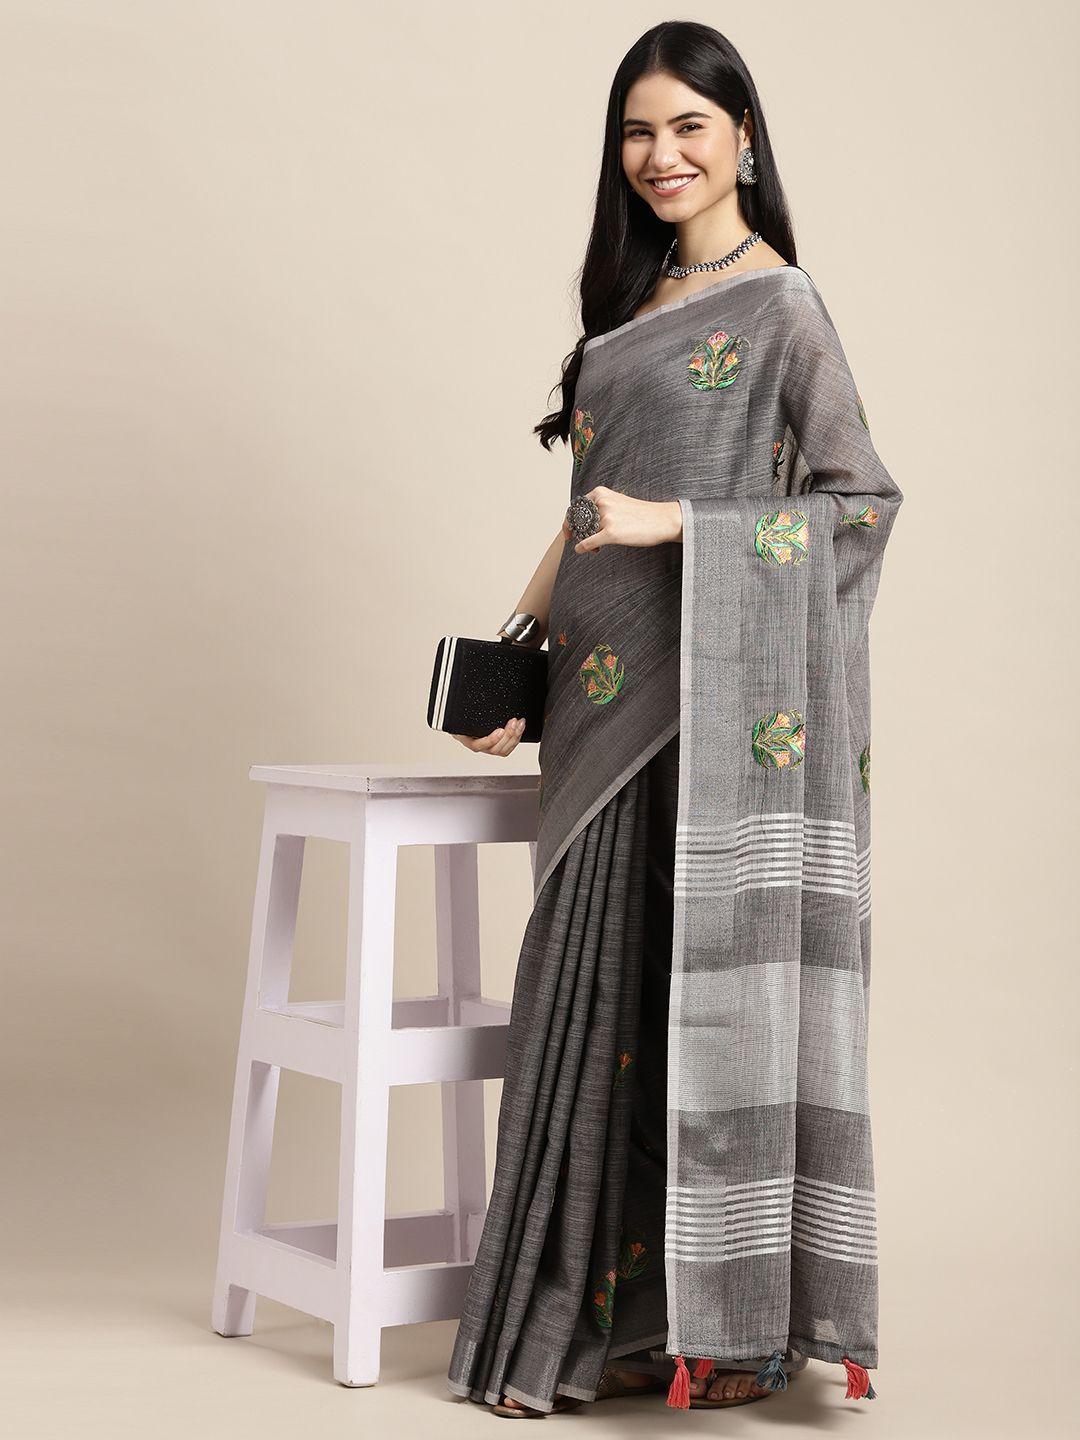 sangam prints grey & green floral embroidered linen blend saree